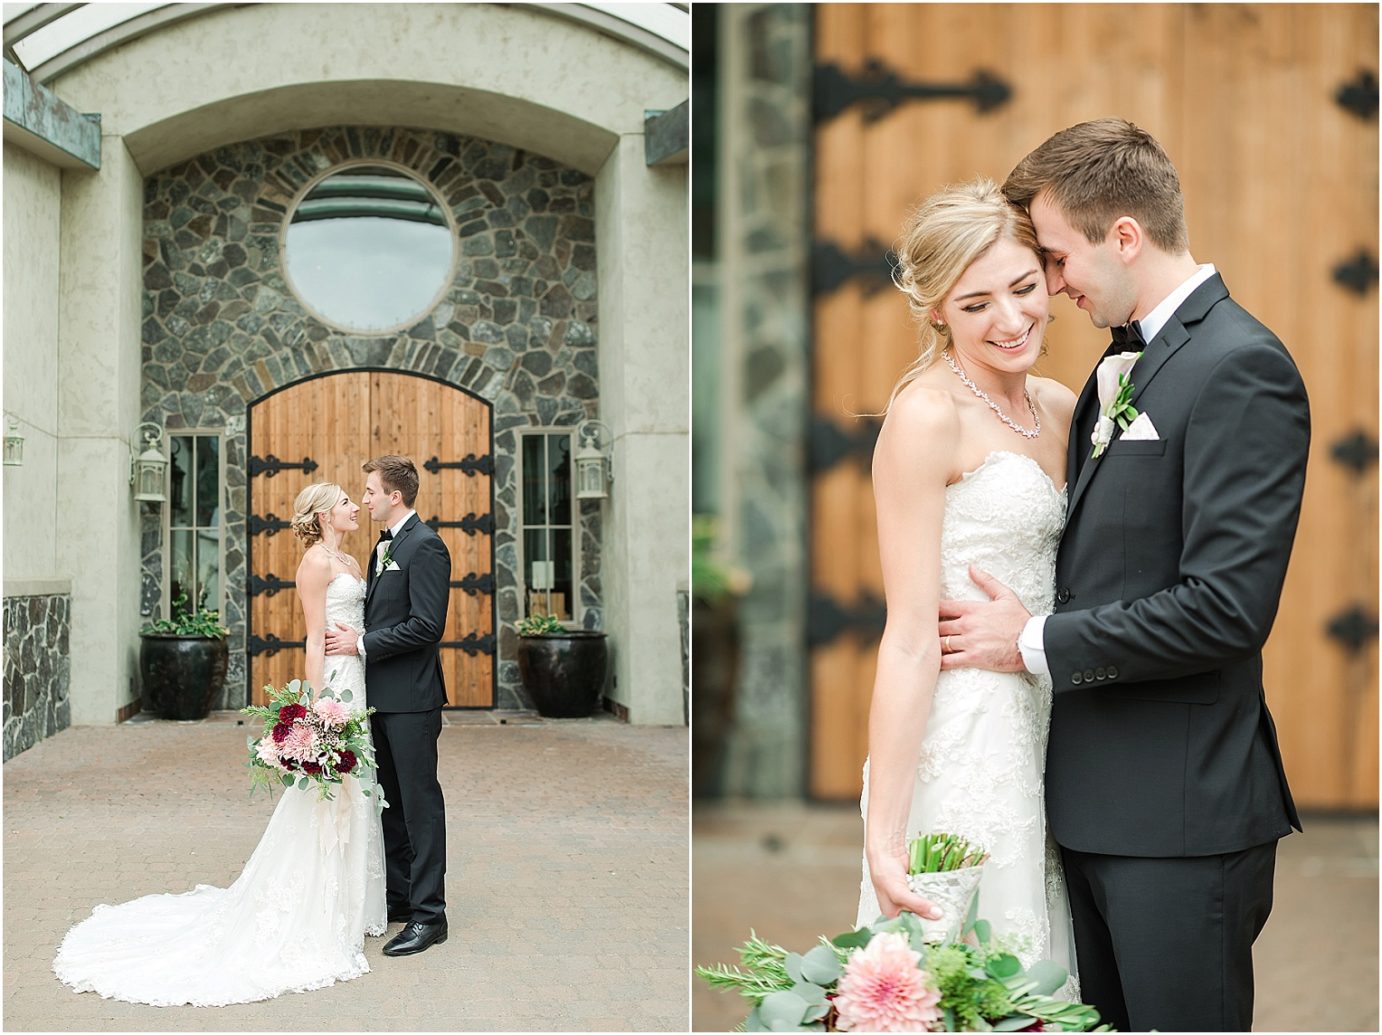 Terra Blanca Winery Wedding Benton City Photographer Armin and Kendall bride and groom by front door